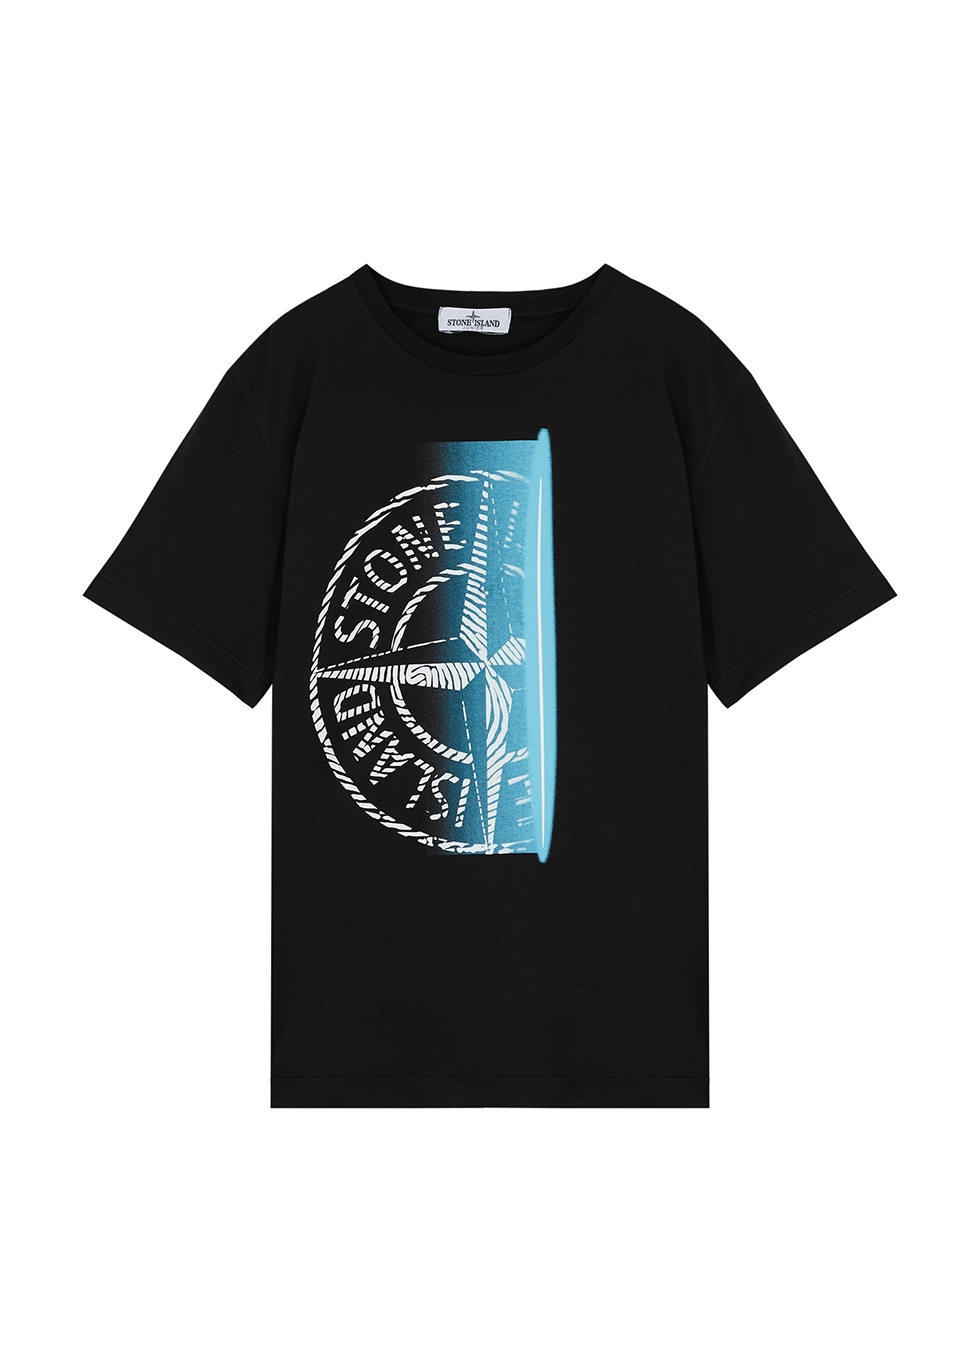 Stone Island KIDS Black logo cotton T-shirt (10-12 years) - Harvey Nichols